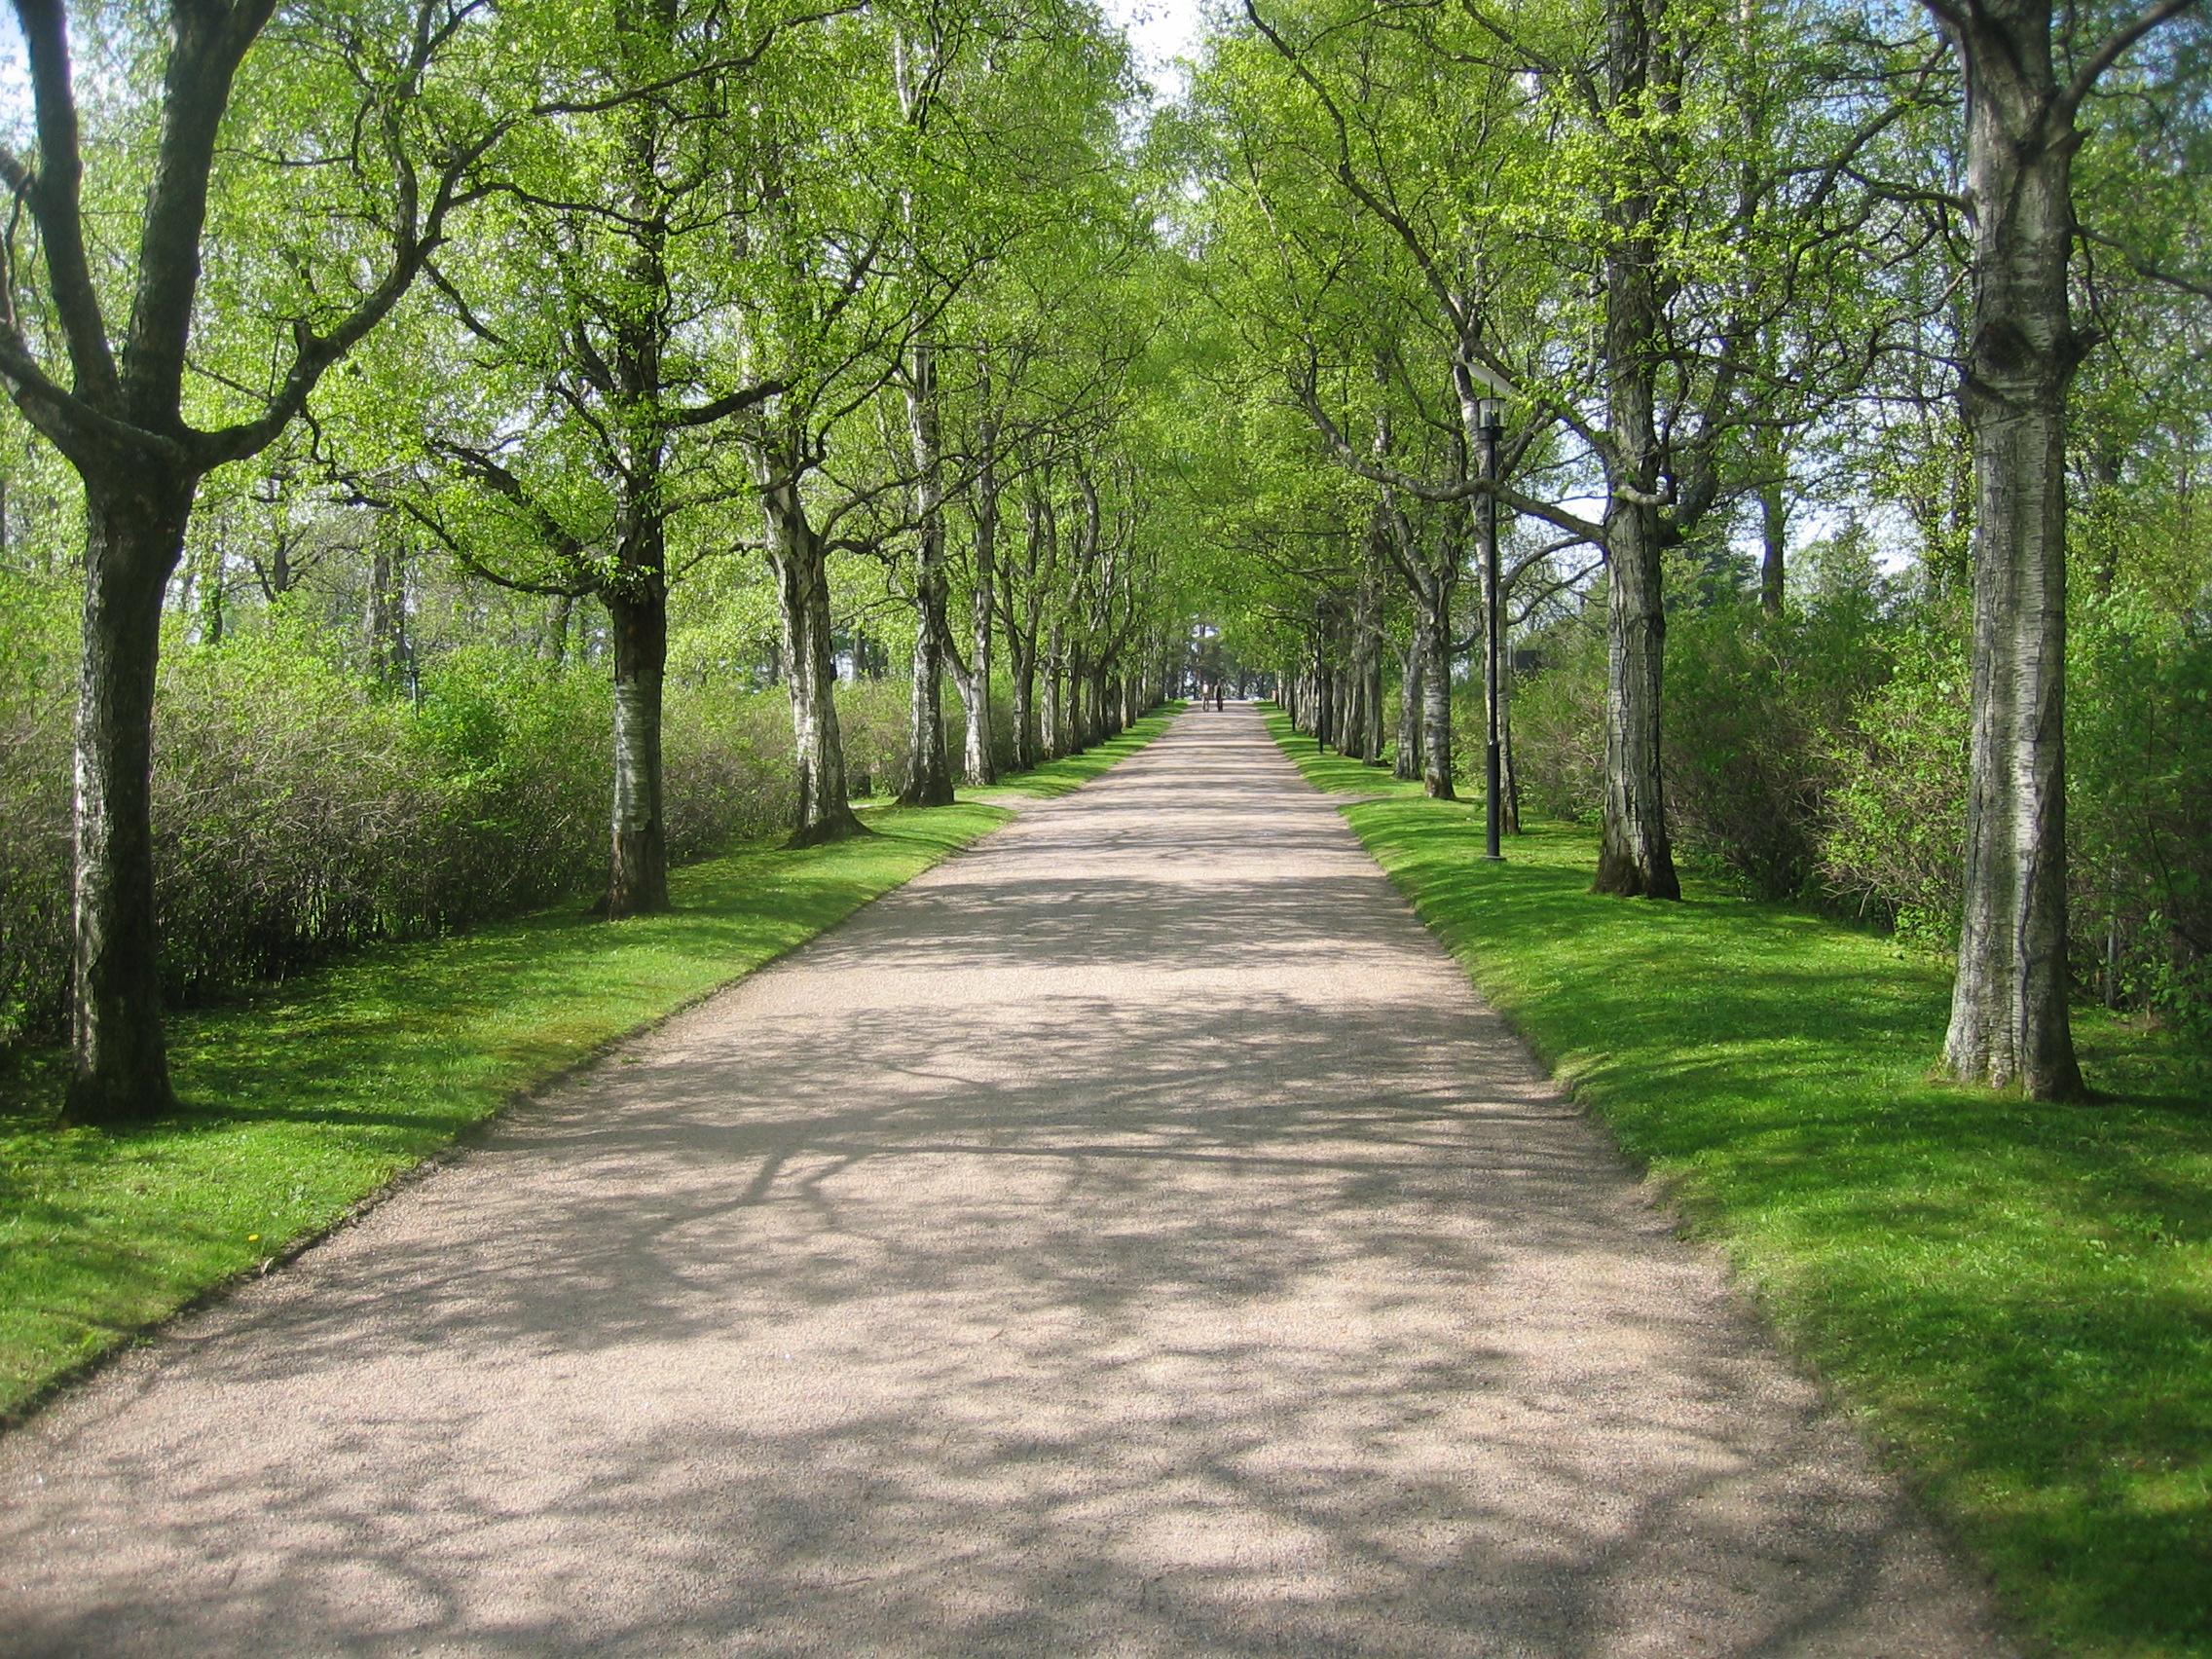 File:A road at Hietaniemi cemetery.JPG - Wikimedia Commons